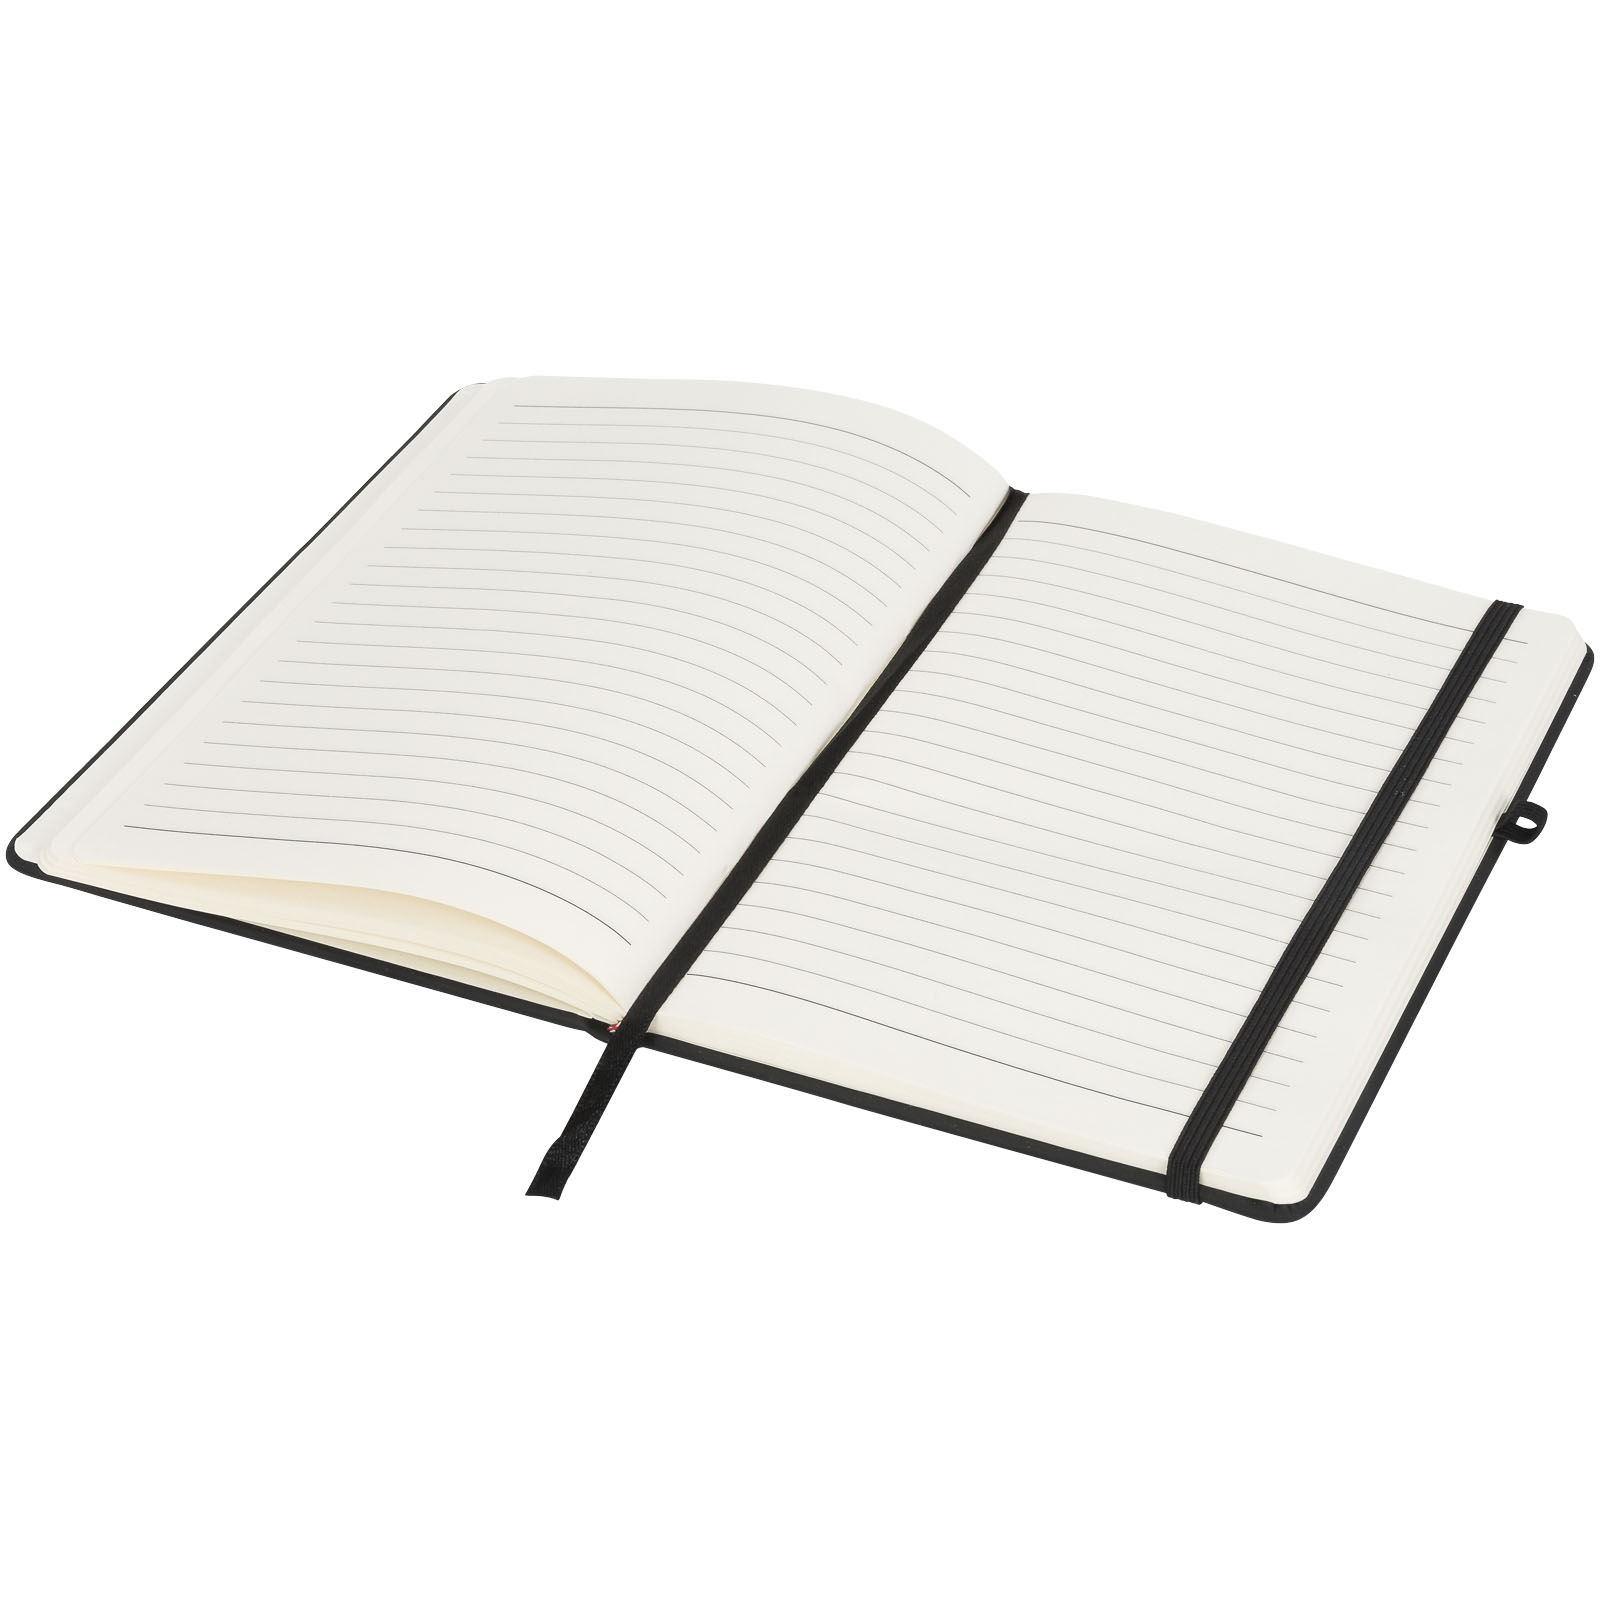 Advertising Hard cover notebooks - Noir medium notebook - 3